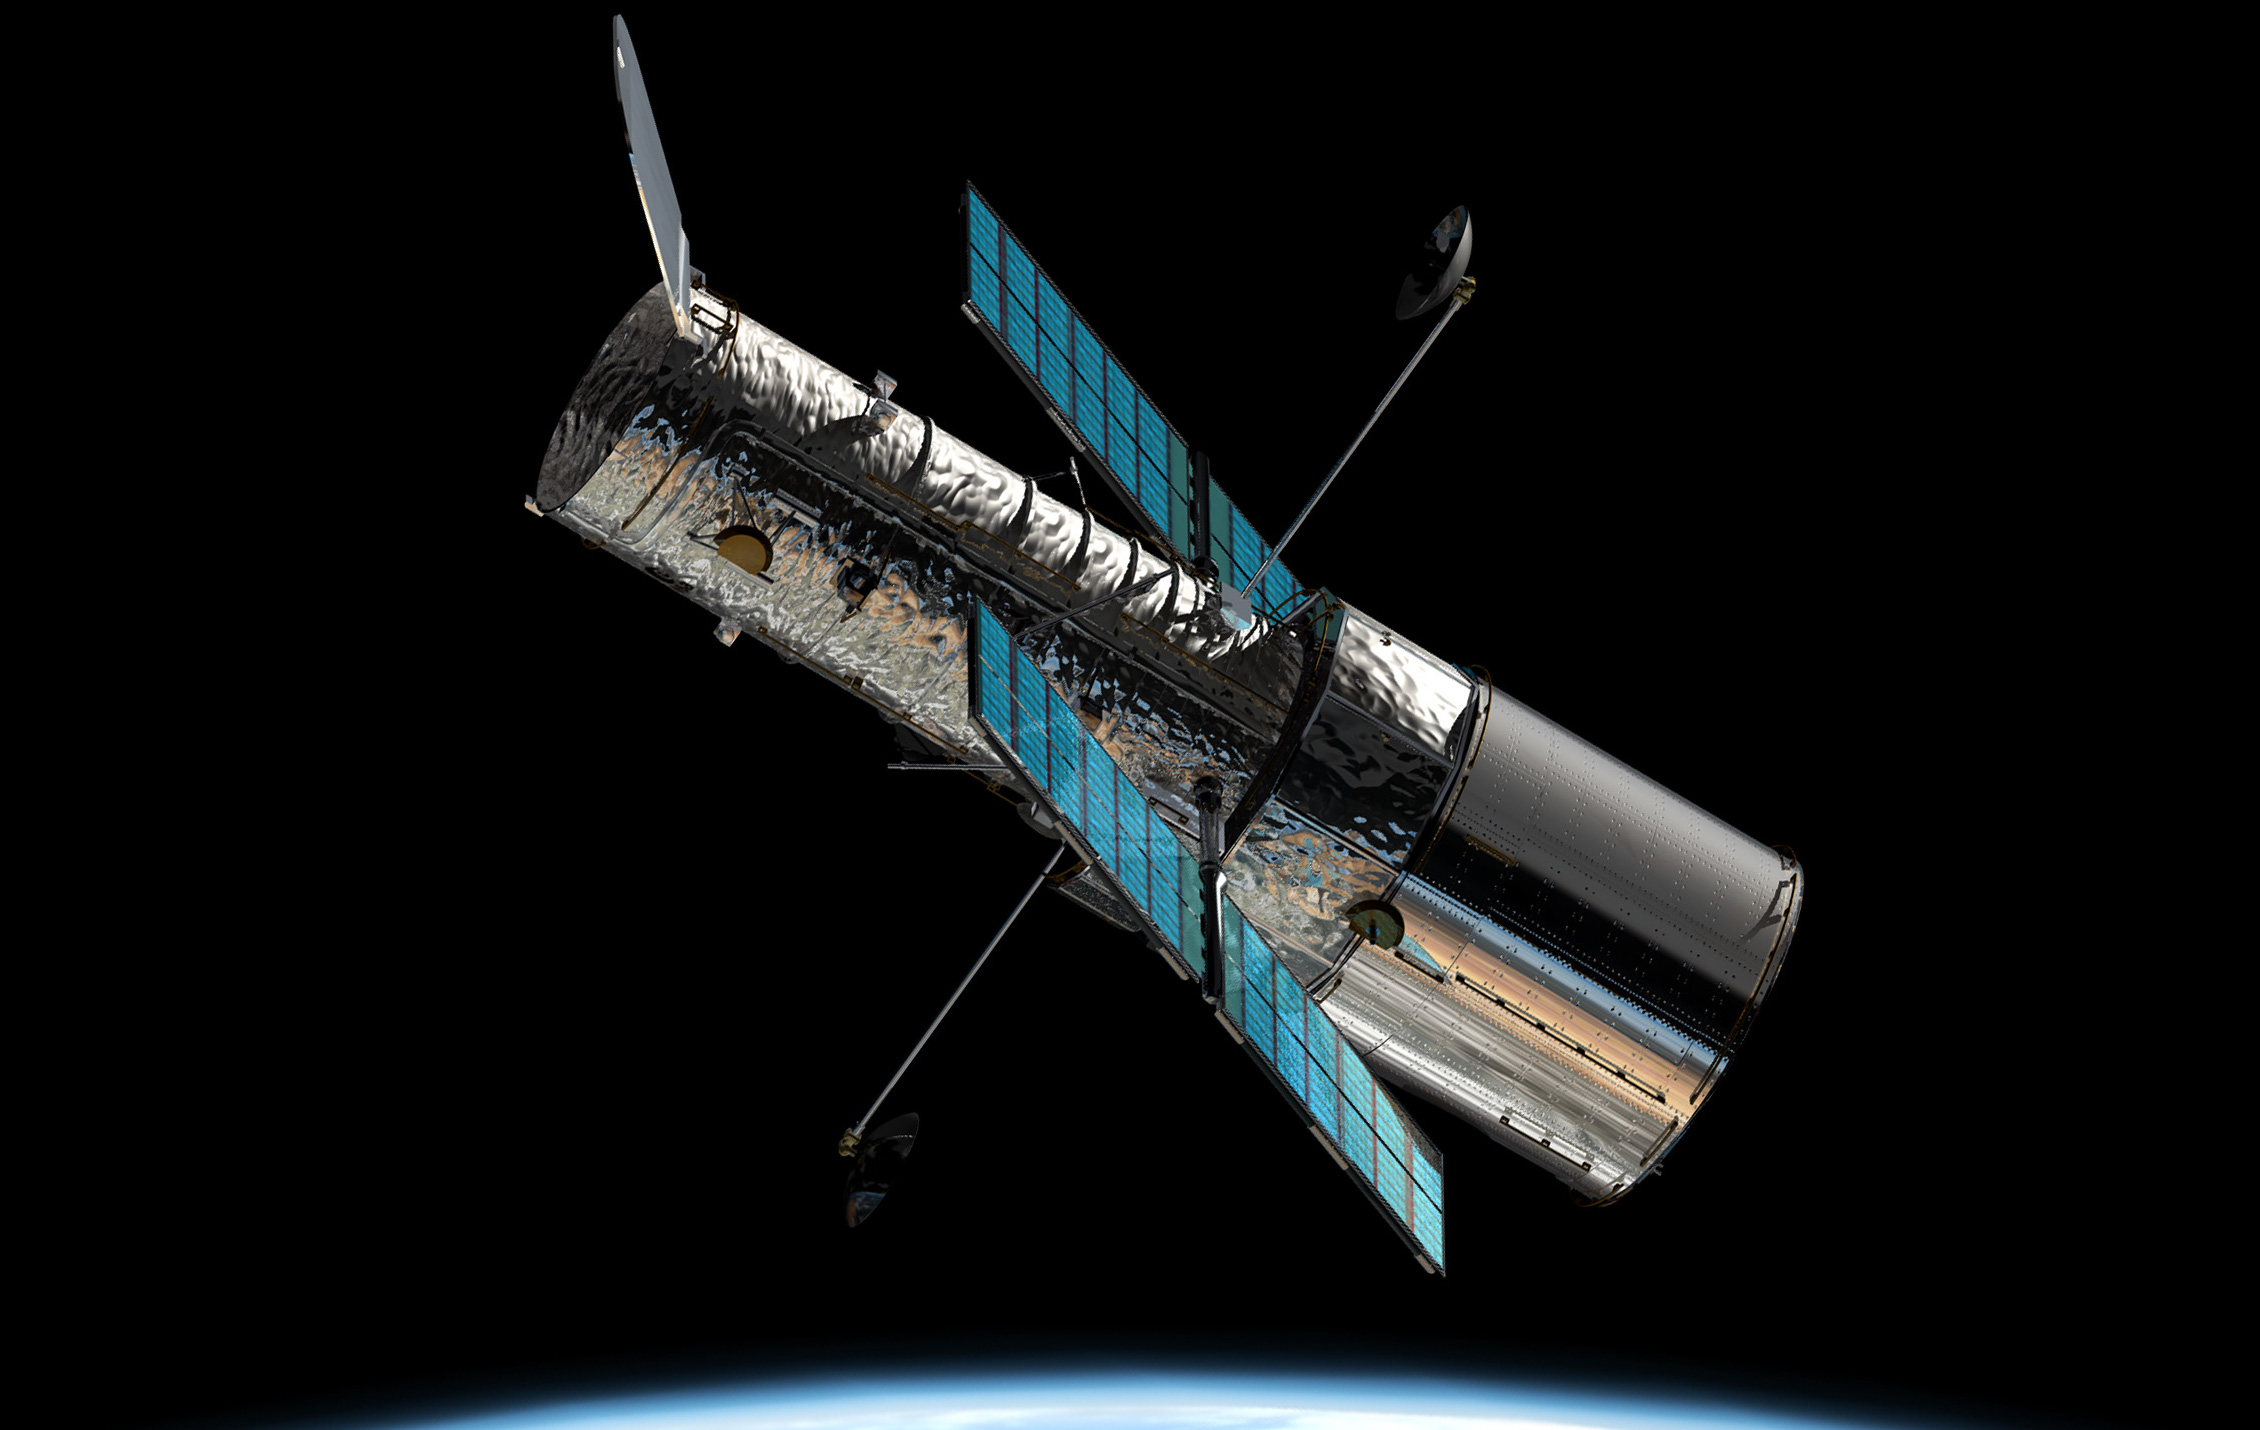 The Hubble Space Telescope in orbit around Earth